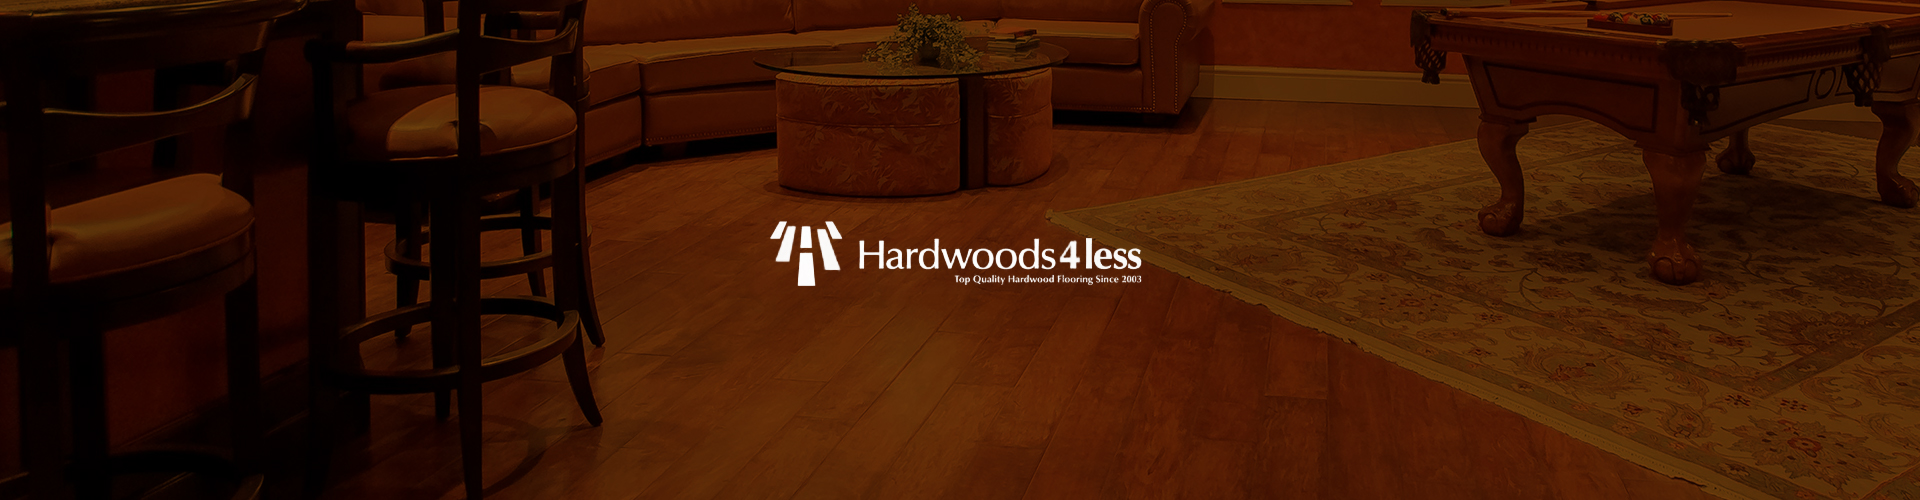 Case Study - Hardwoods 4 Less